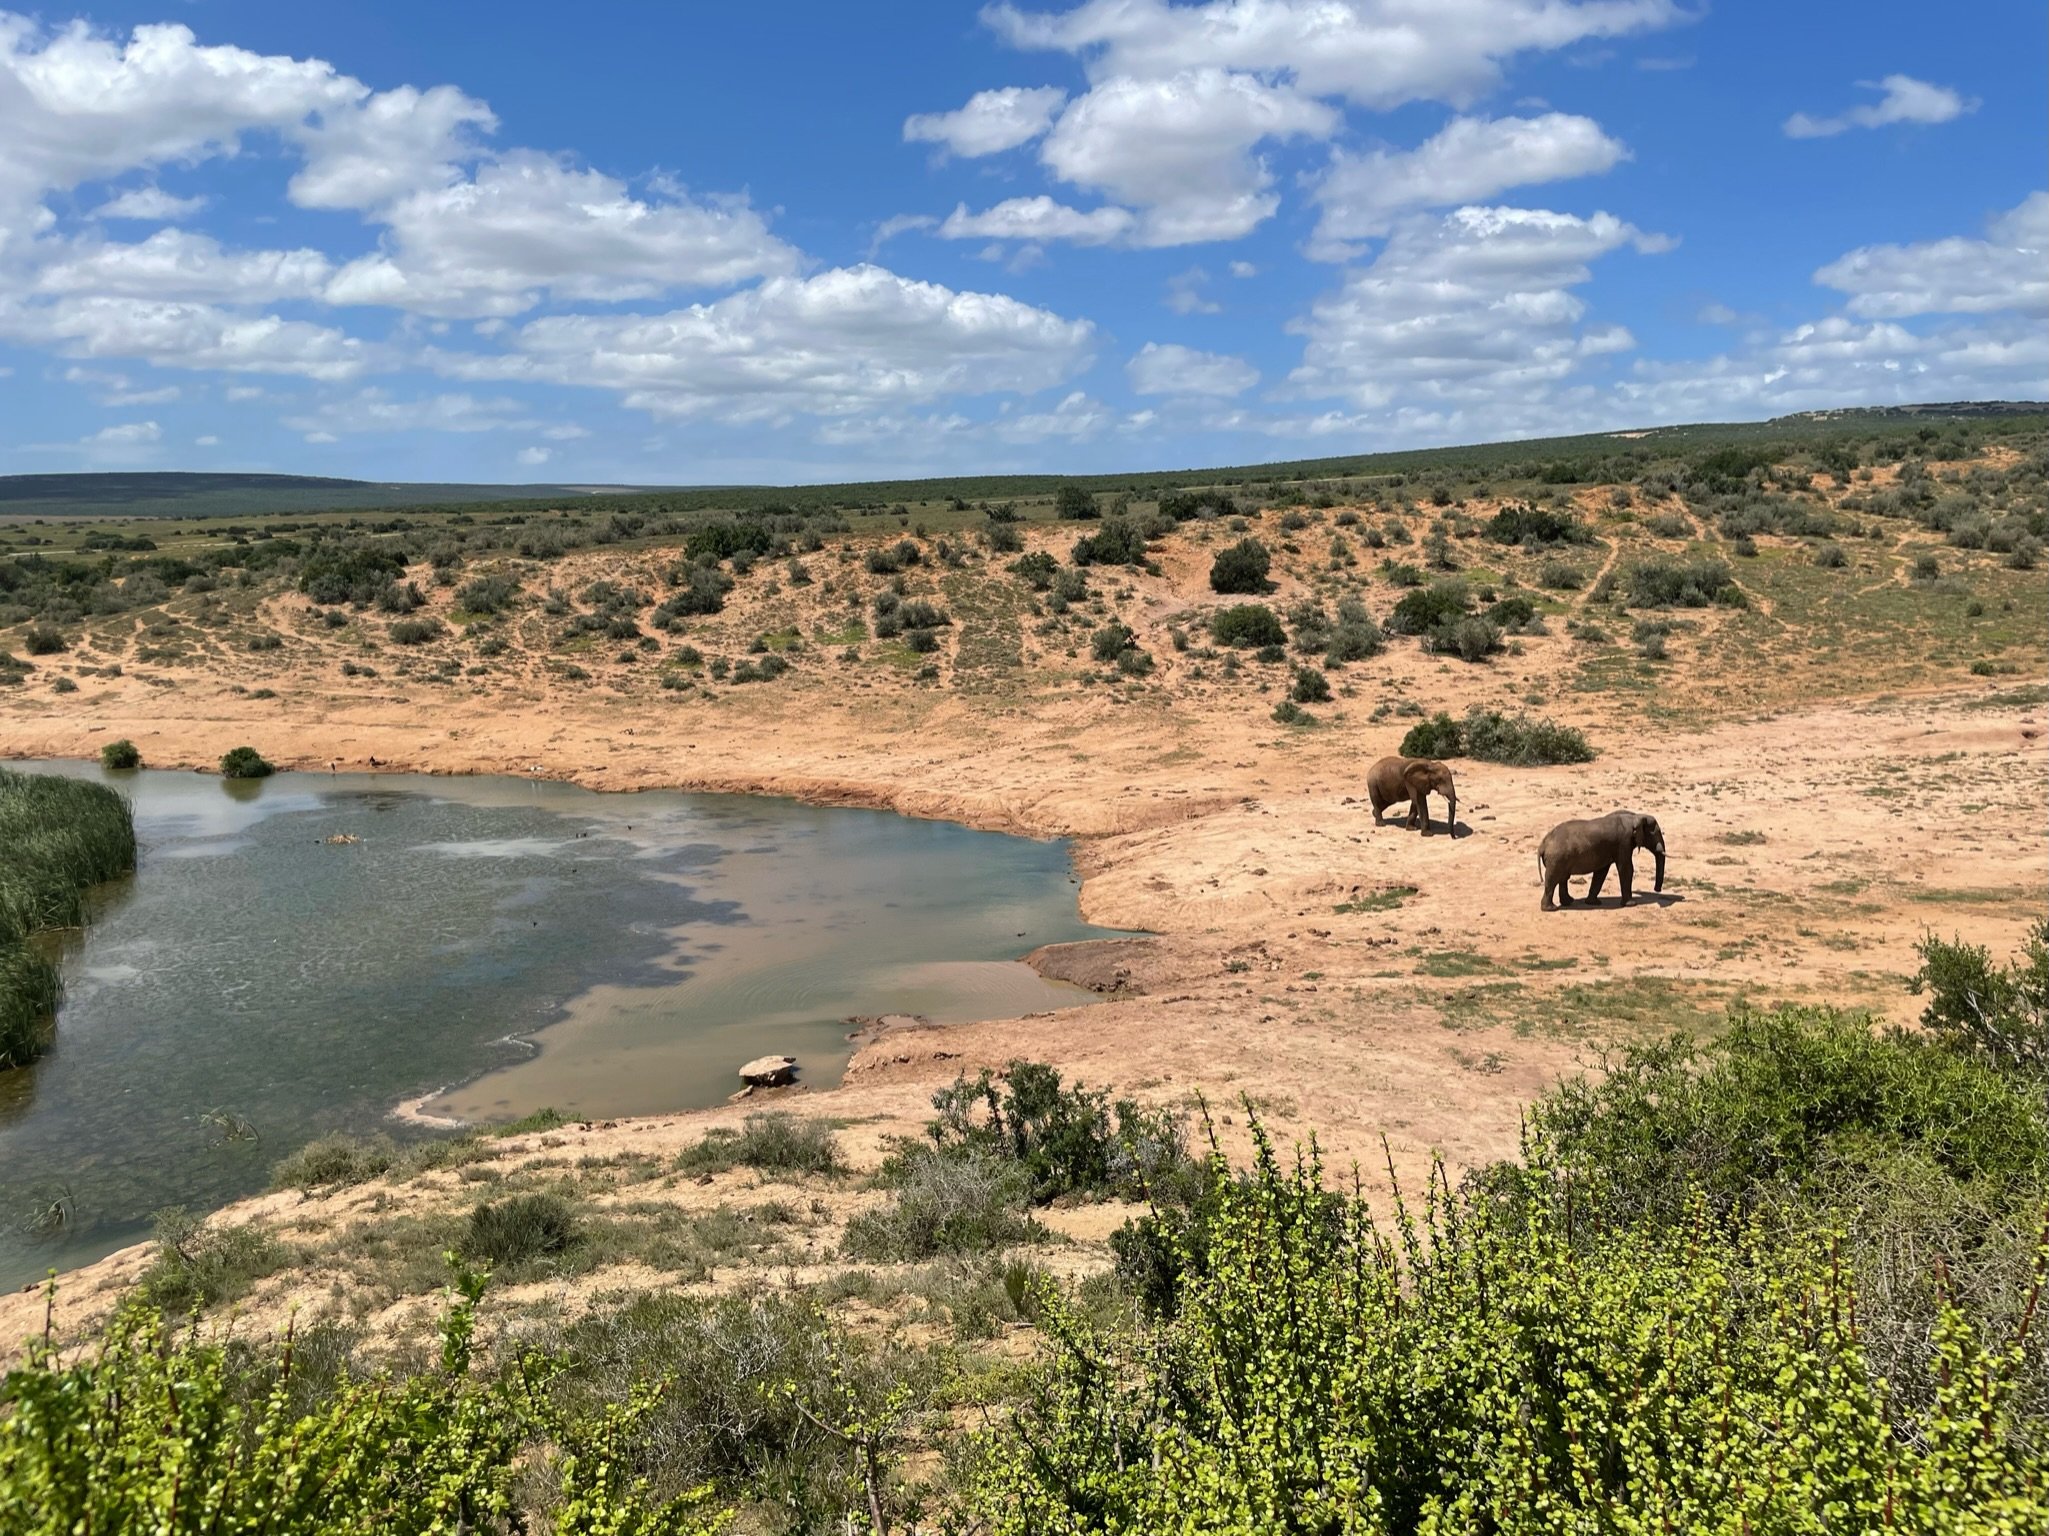 A weekend away in Port Elizabeth visiting Addo Elephant National Park.